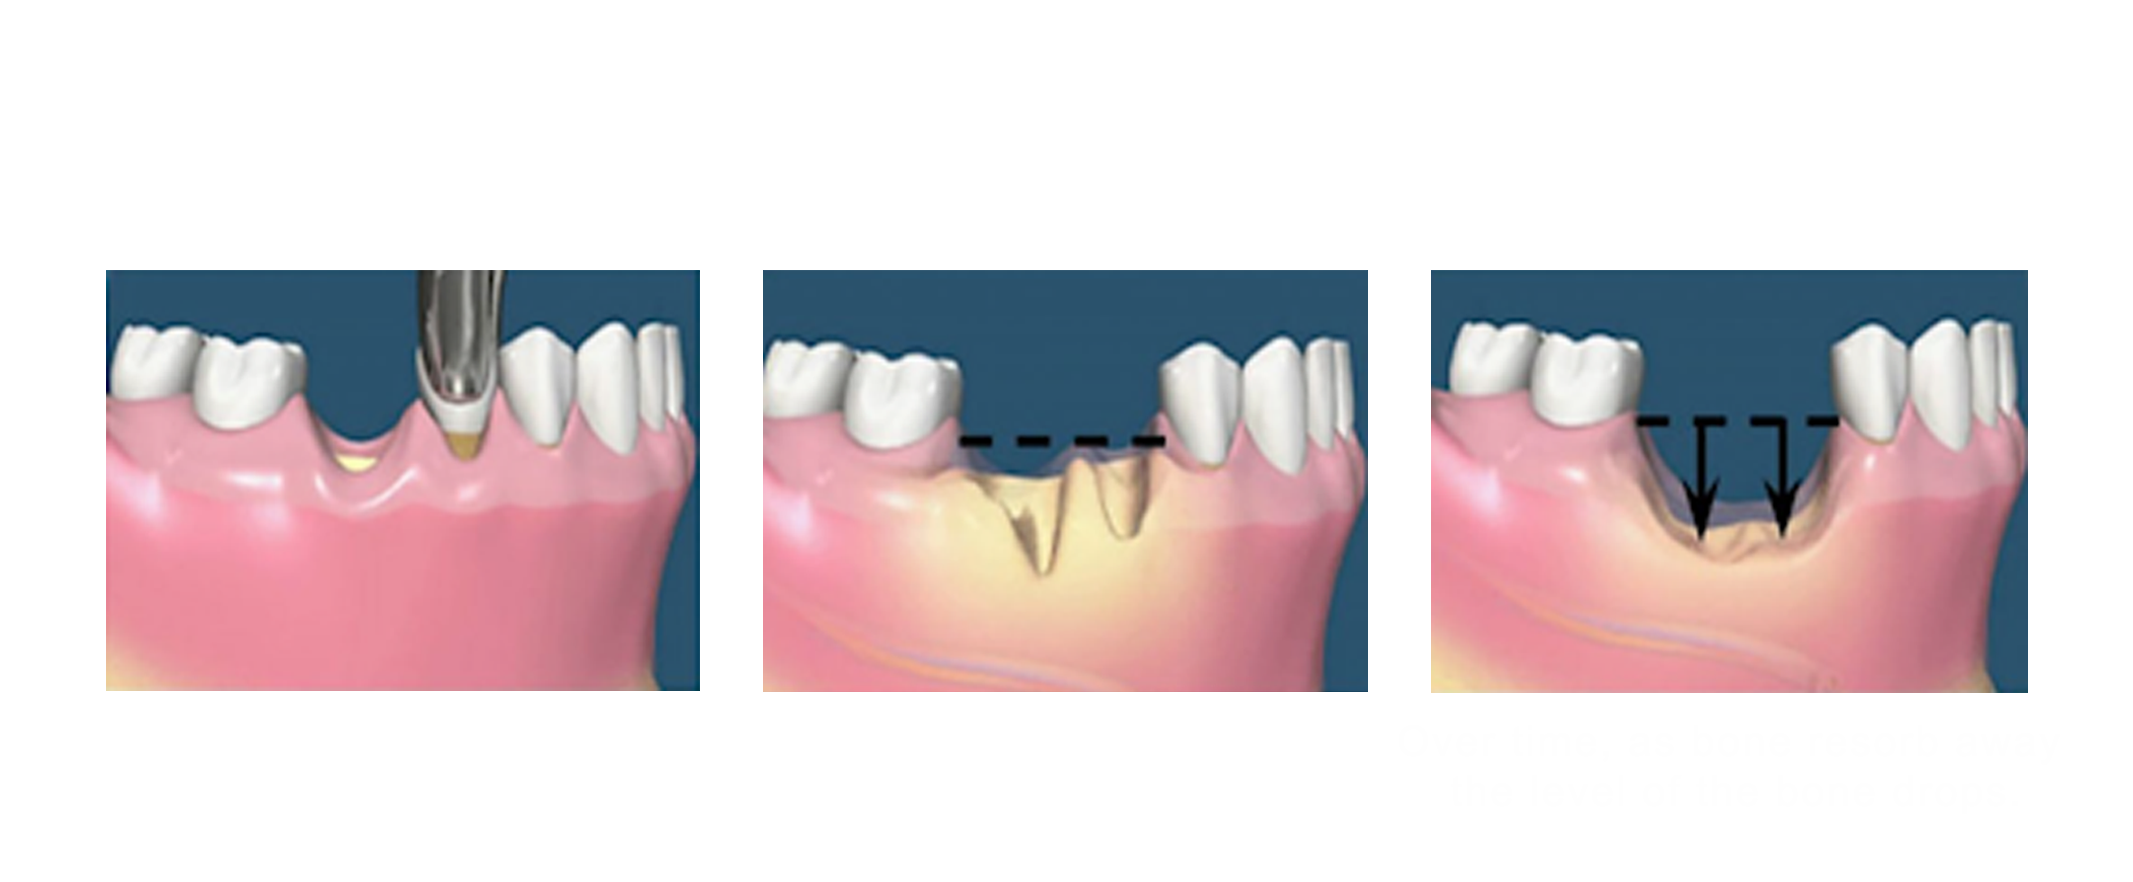 dental implant and bone resorption 3D illustration